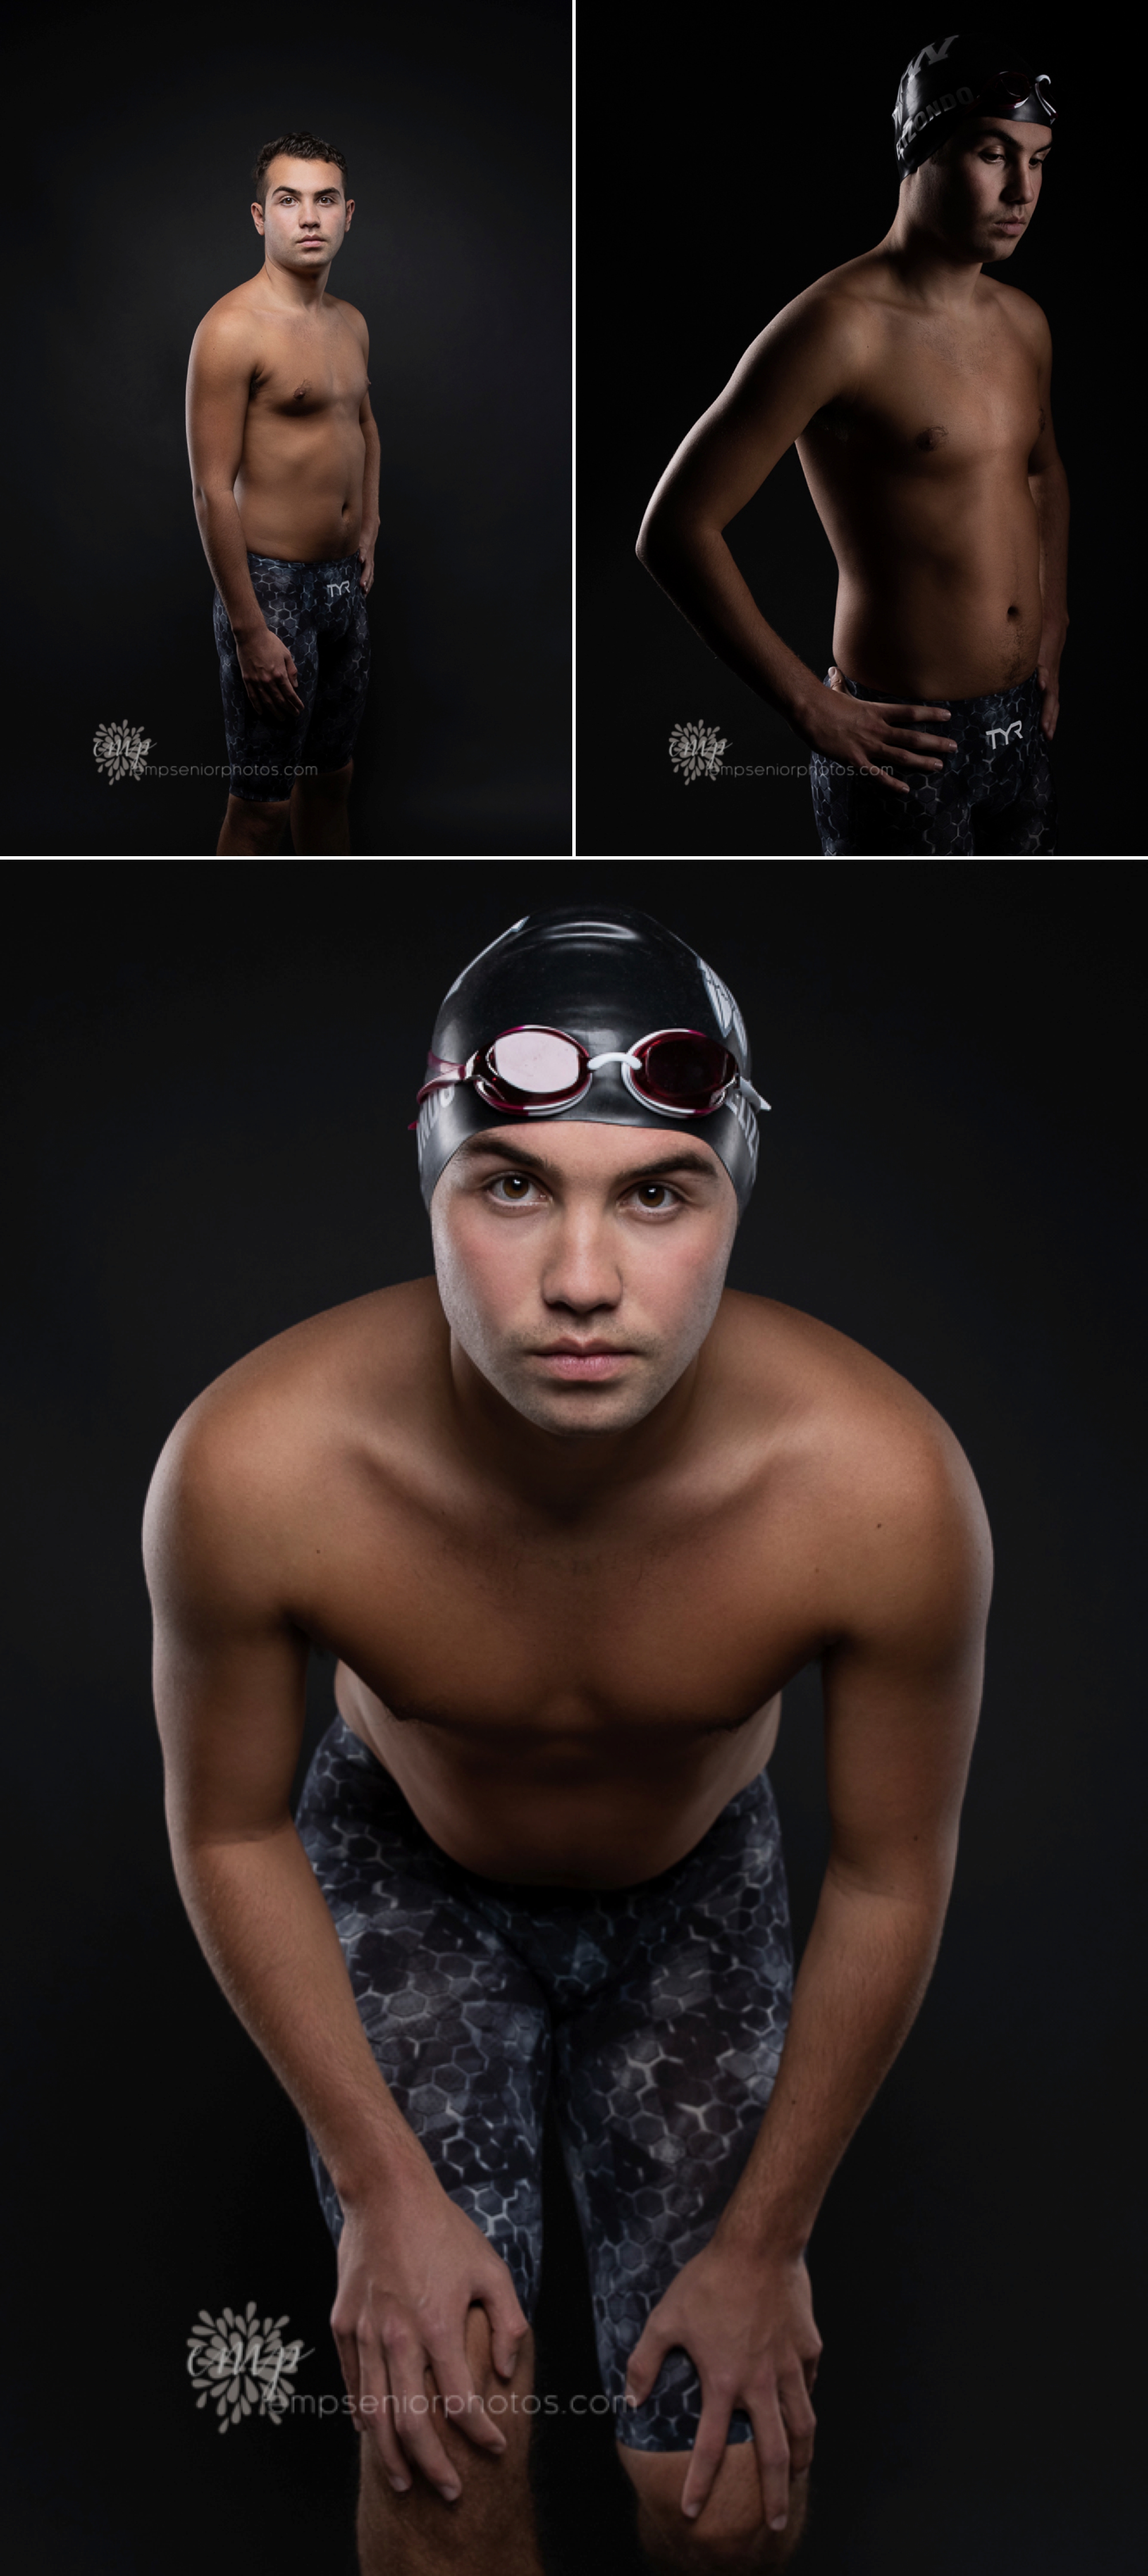 Ohio high school senior swimmer studio photos